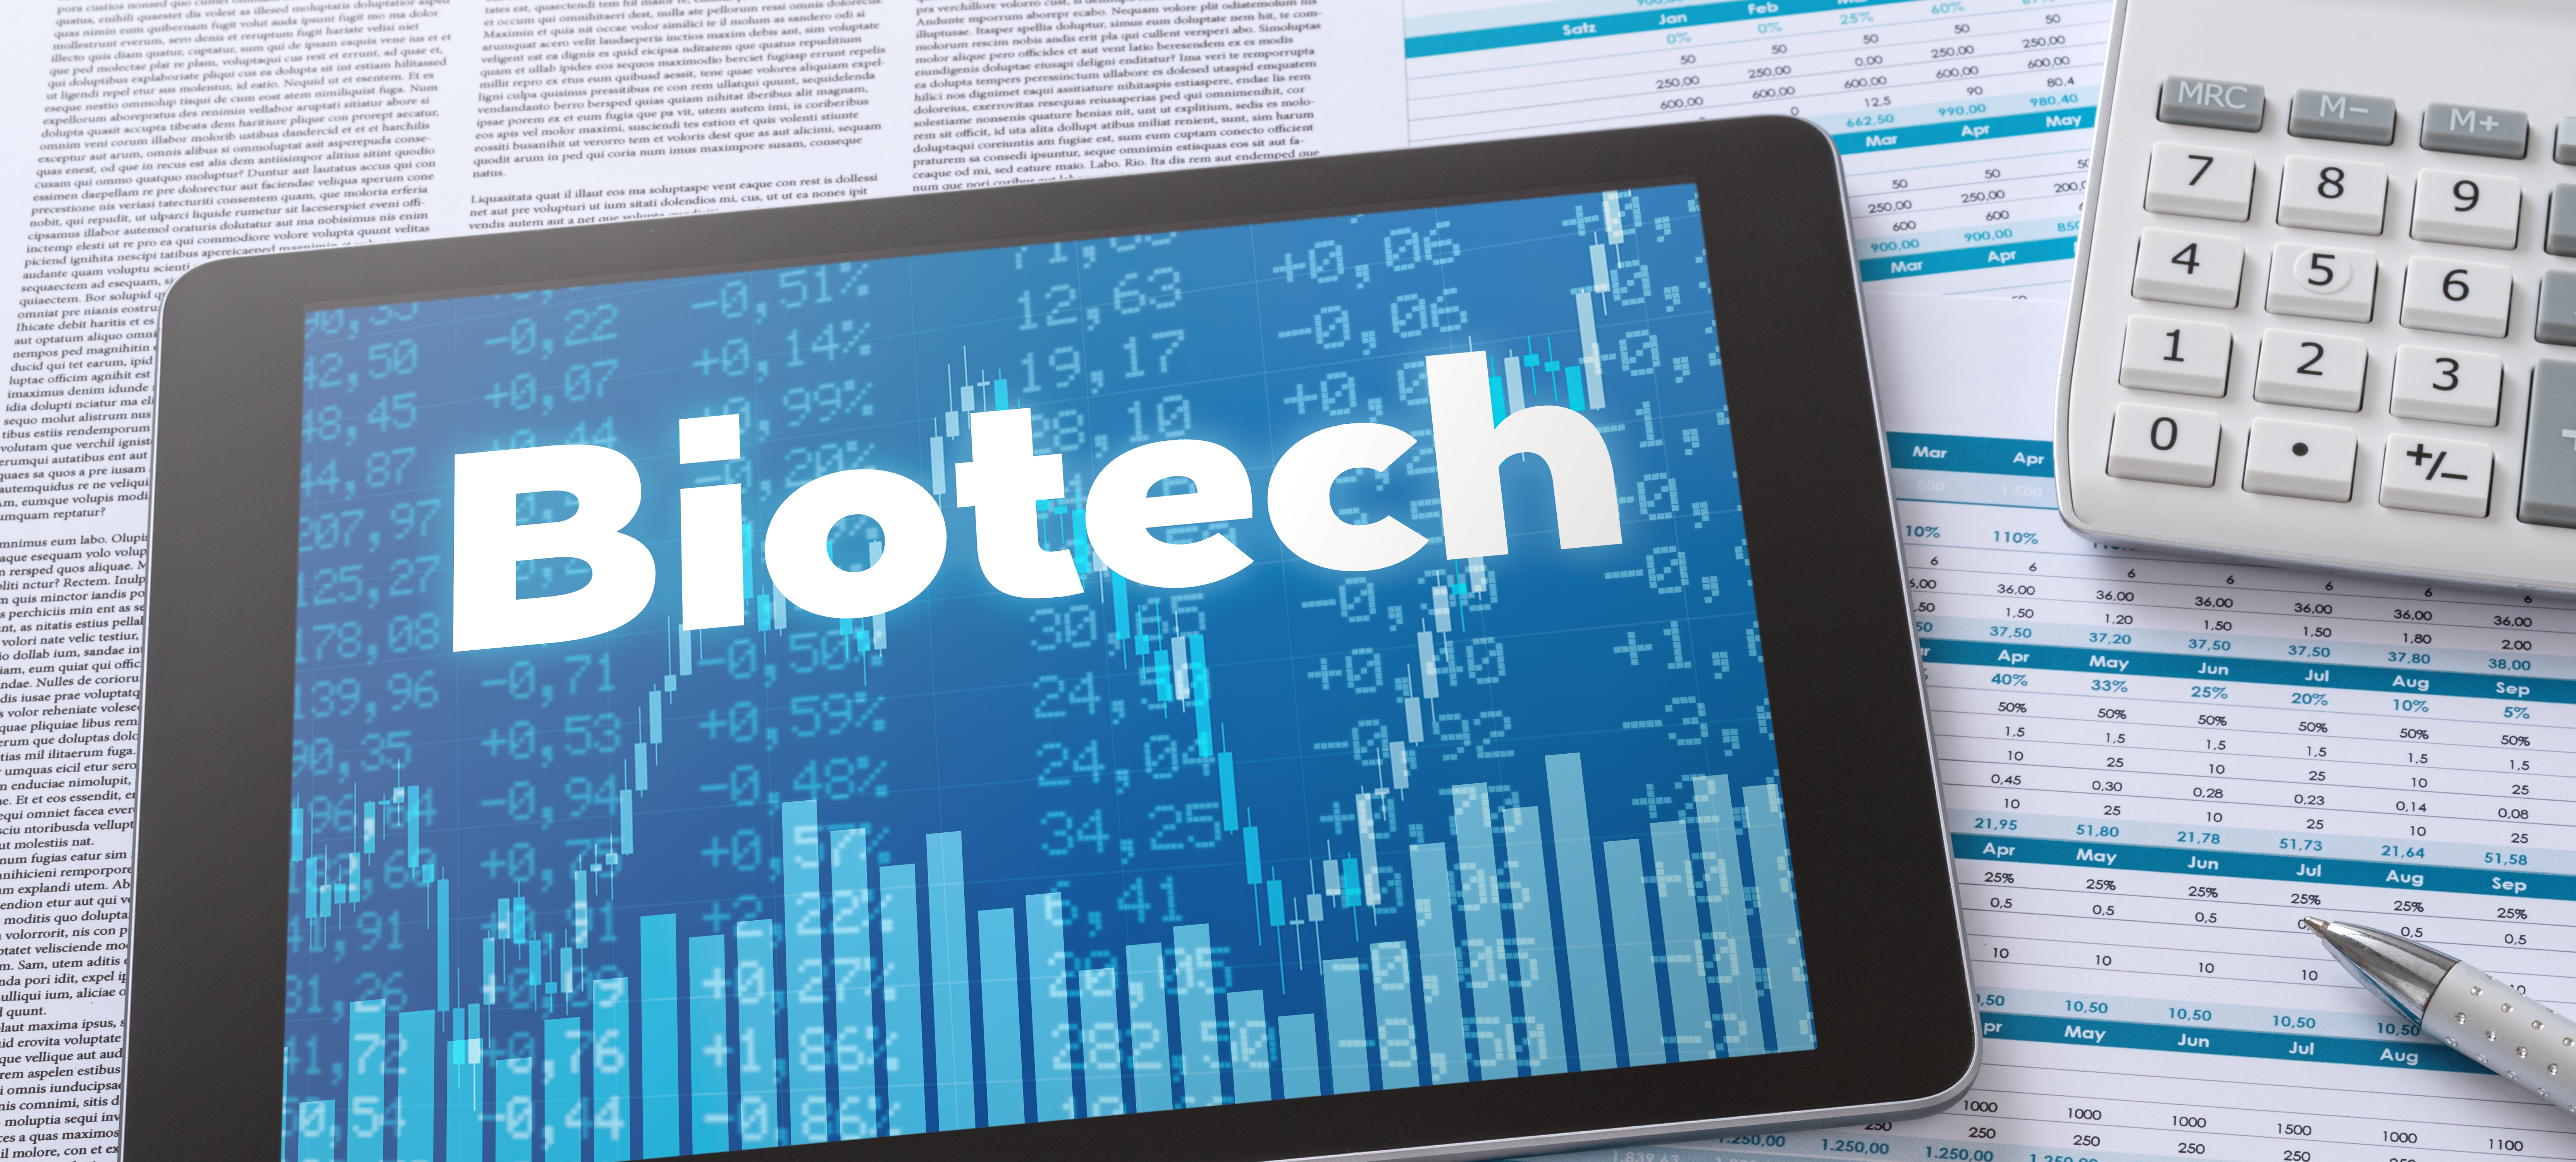 Historic Biotech Bounce Back